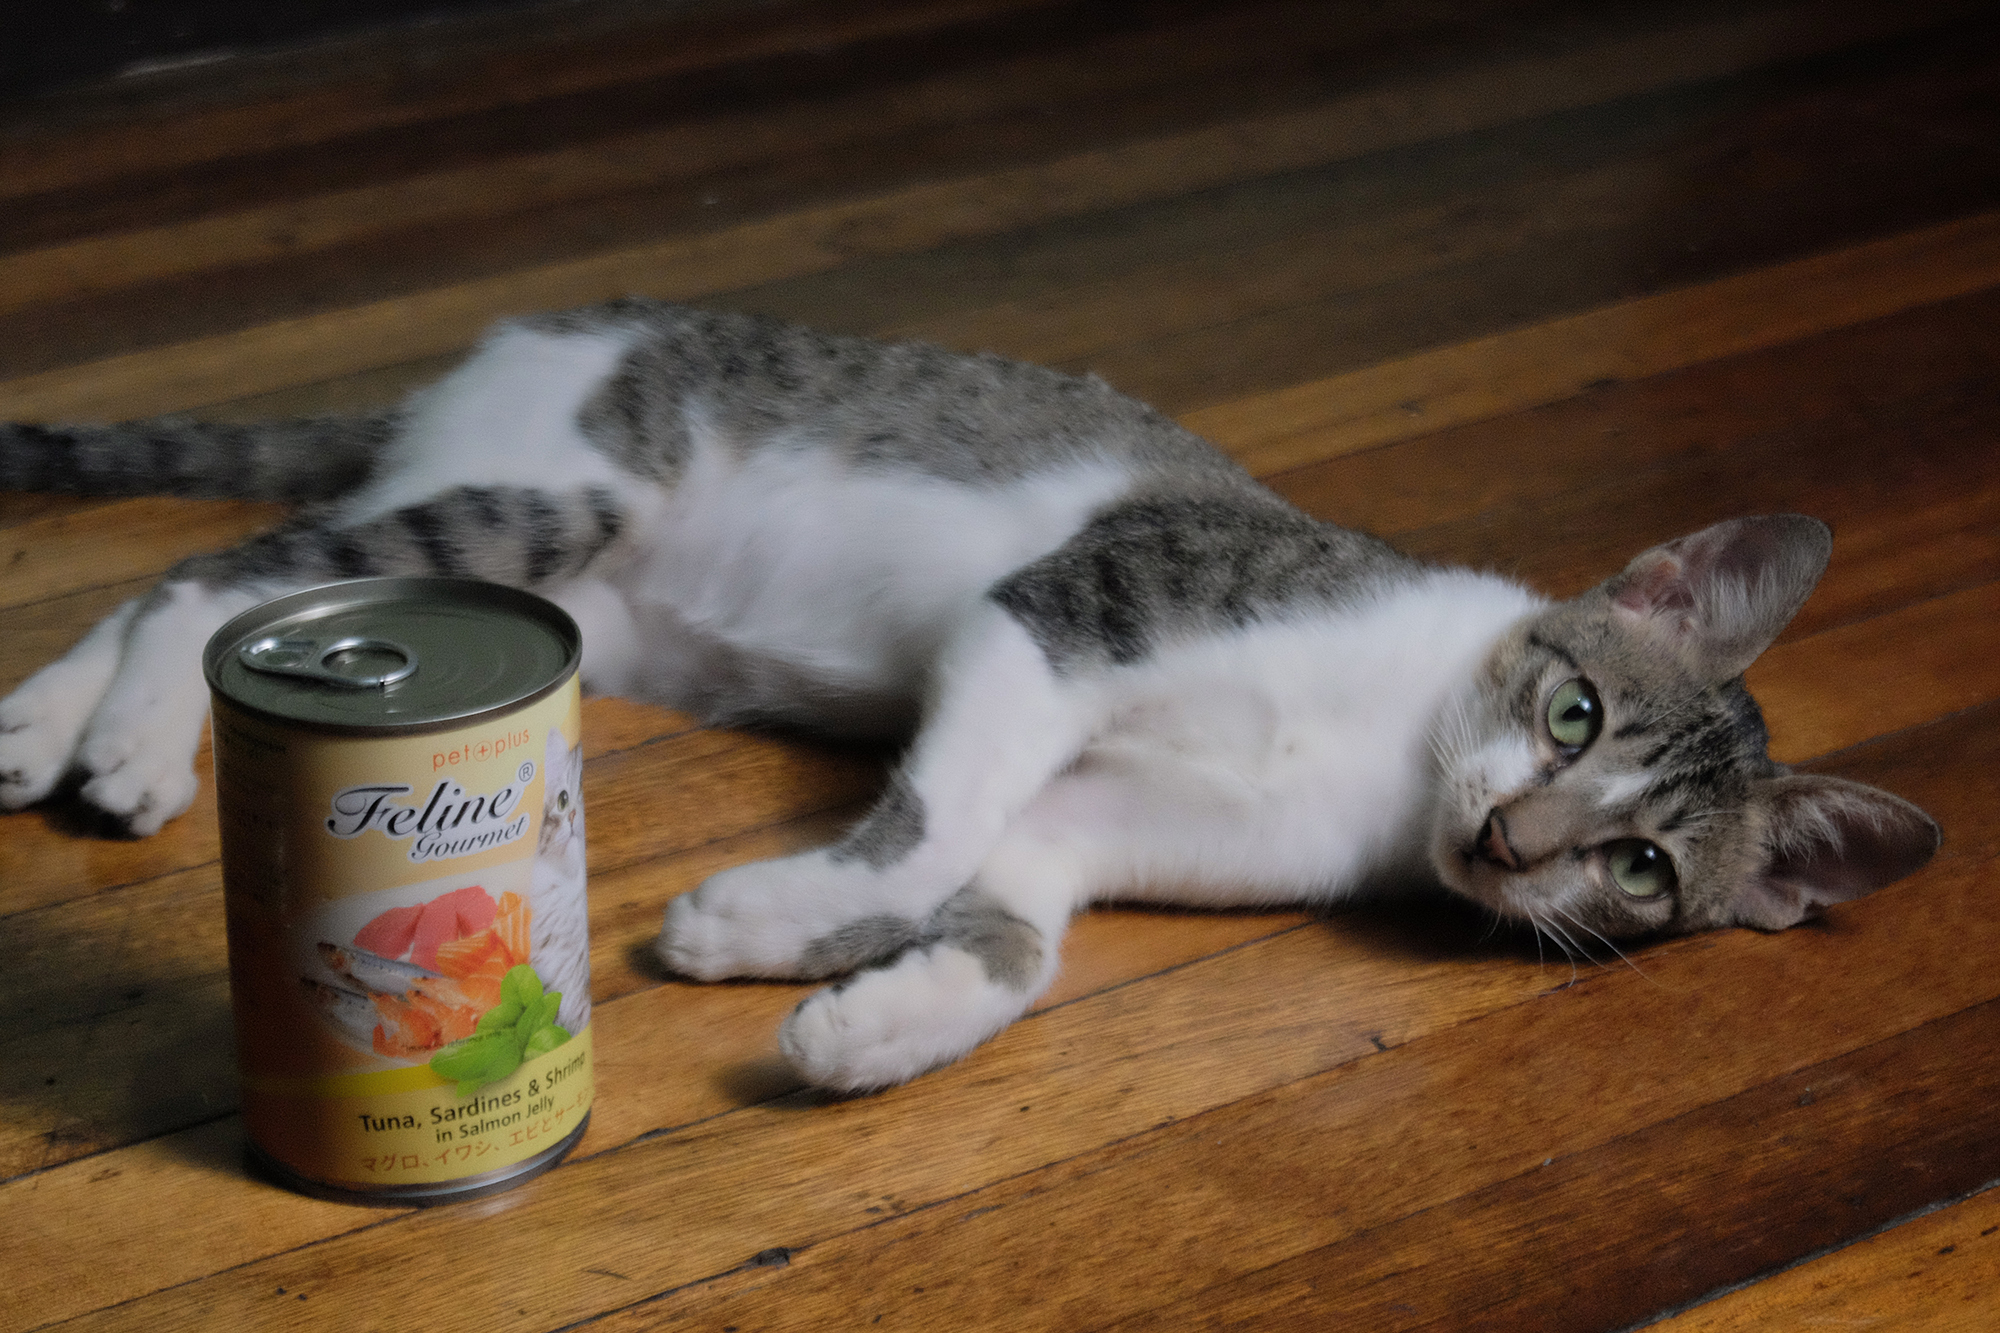 Pet Plus Feline Gourmet Cat Food in 'Tuna, Sardines and Shrimp in Salmon Jelly'